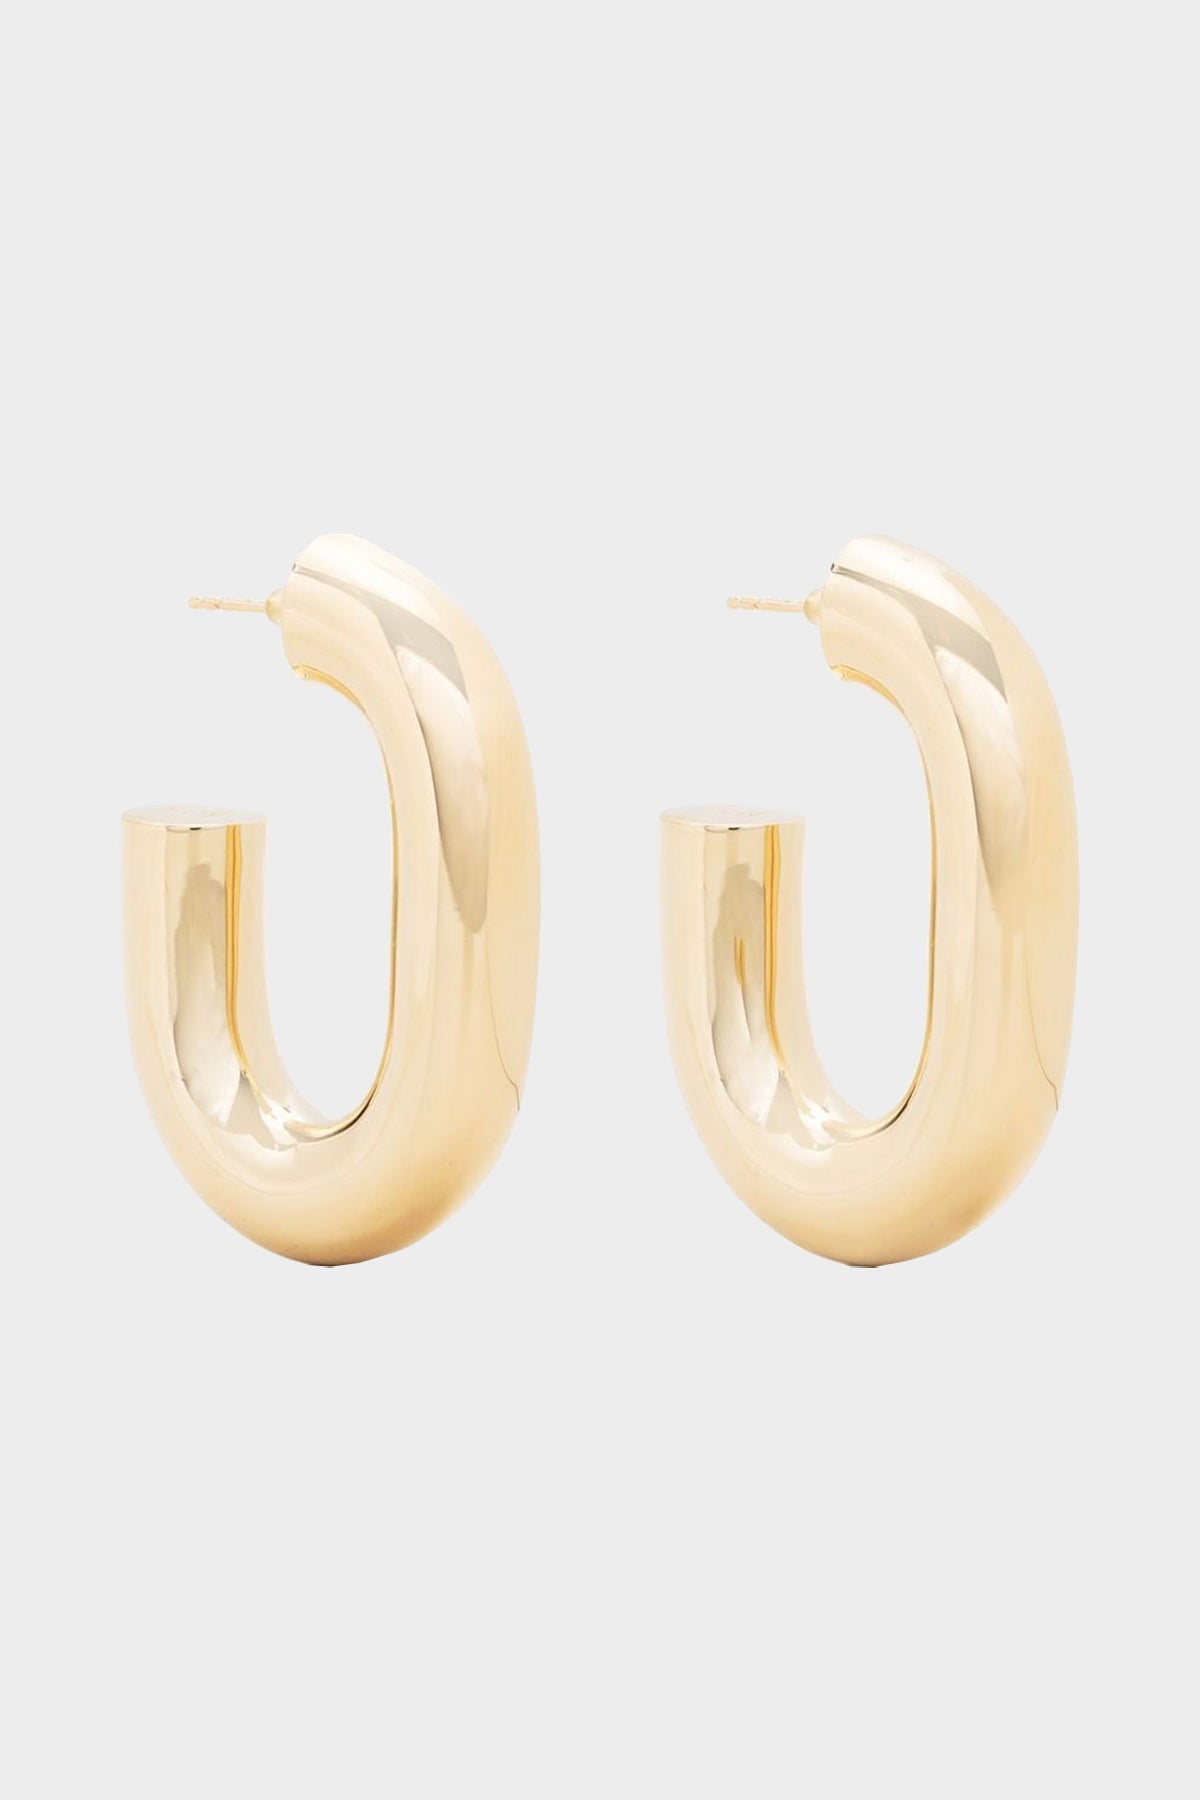 XL Hoops Link Earrings in Gold - shop-olivia.com